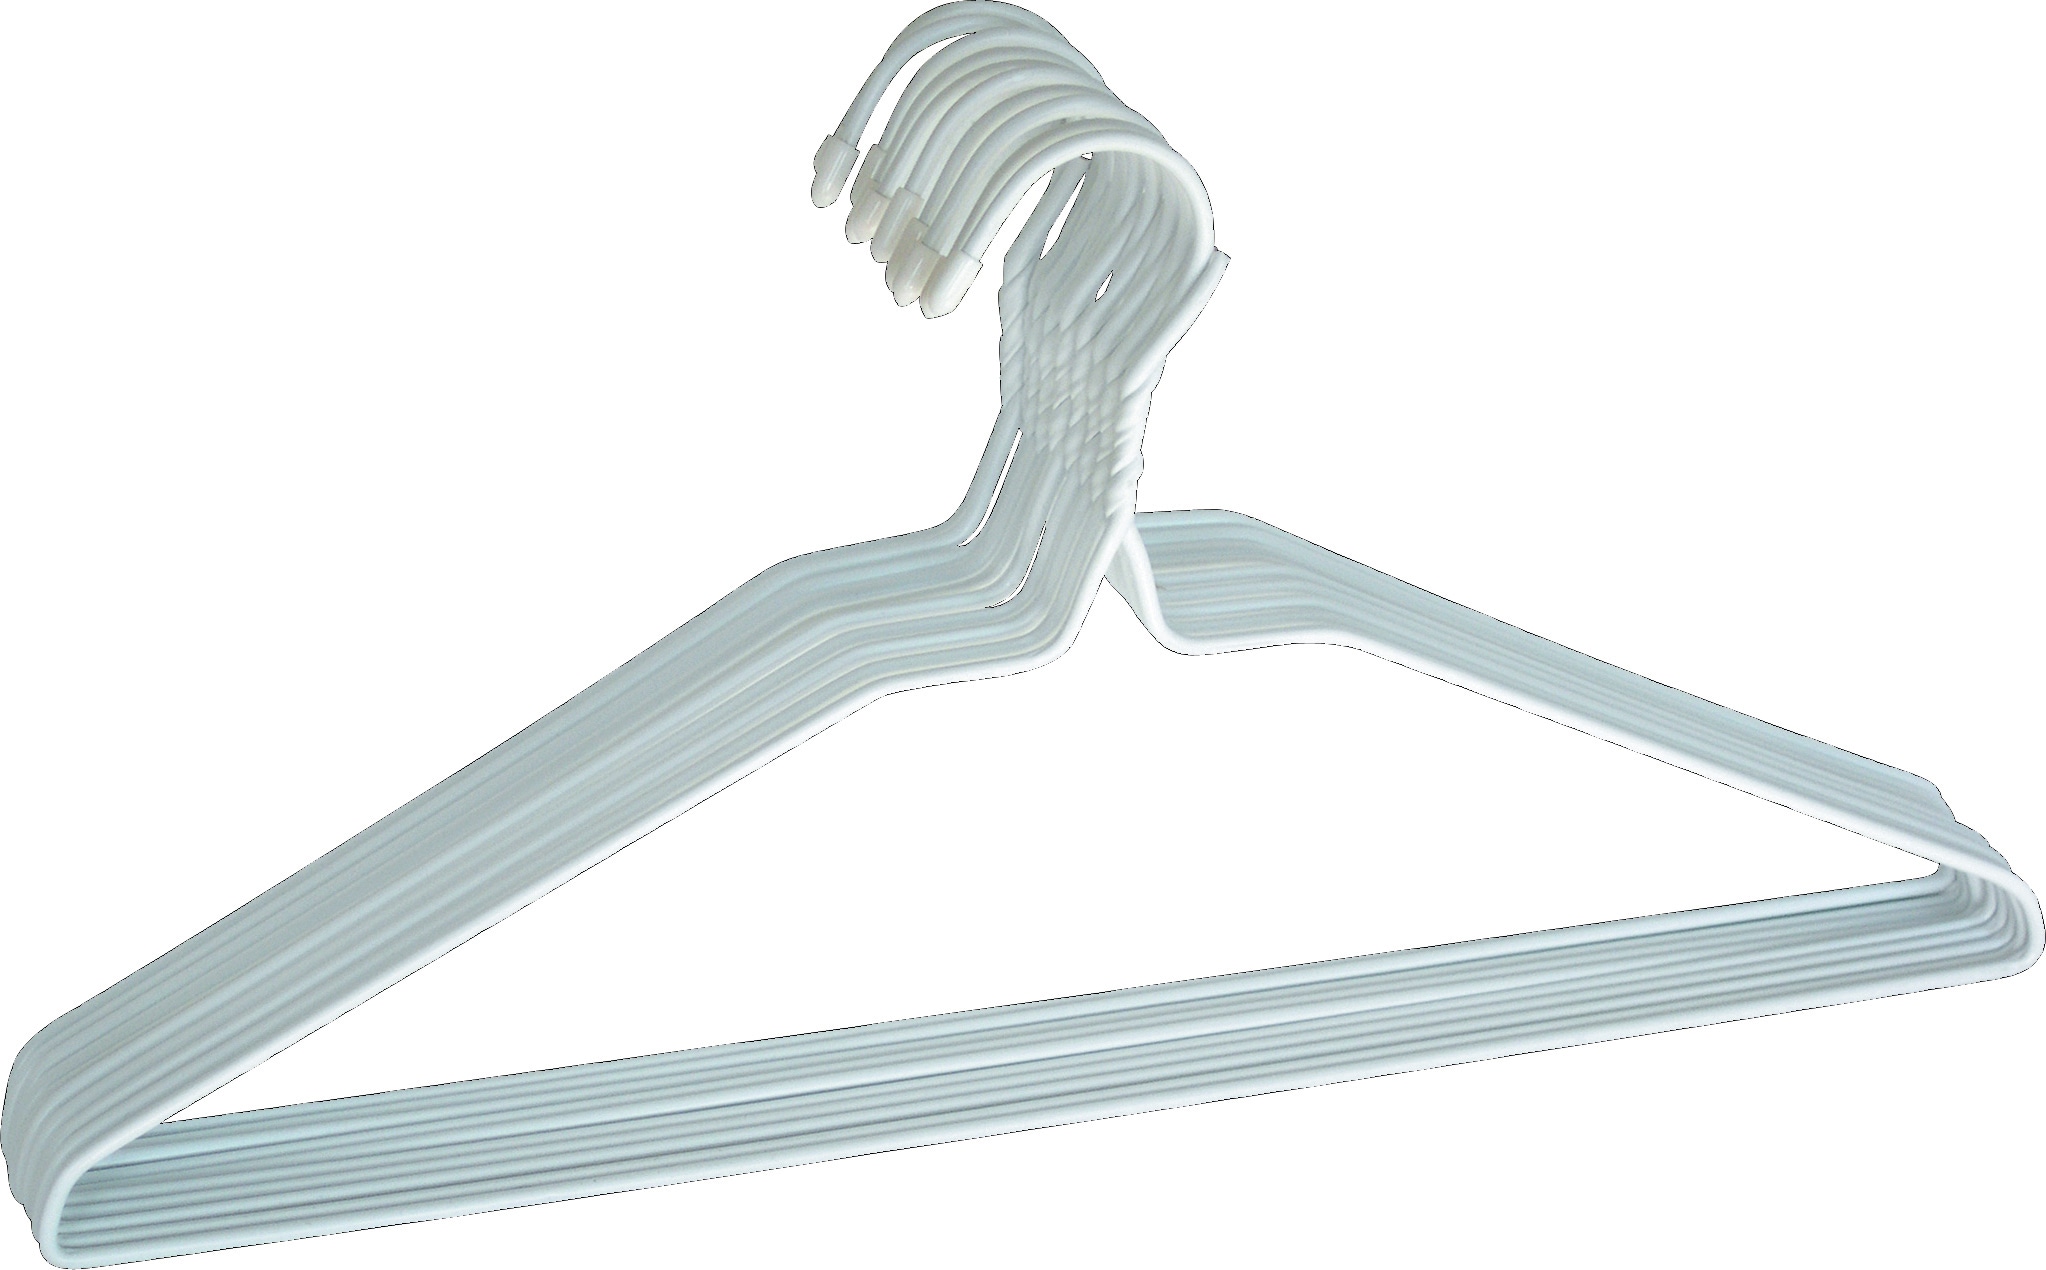 Polypack Polythene Ltd 500 Strong White Plain Metal Wire Clothes Coat Hangers 40cm 16 13G 